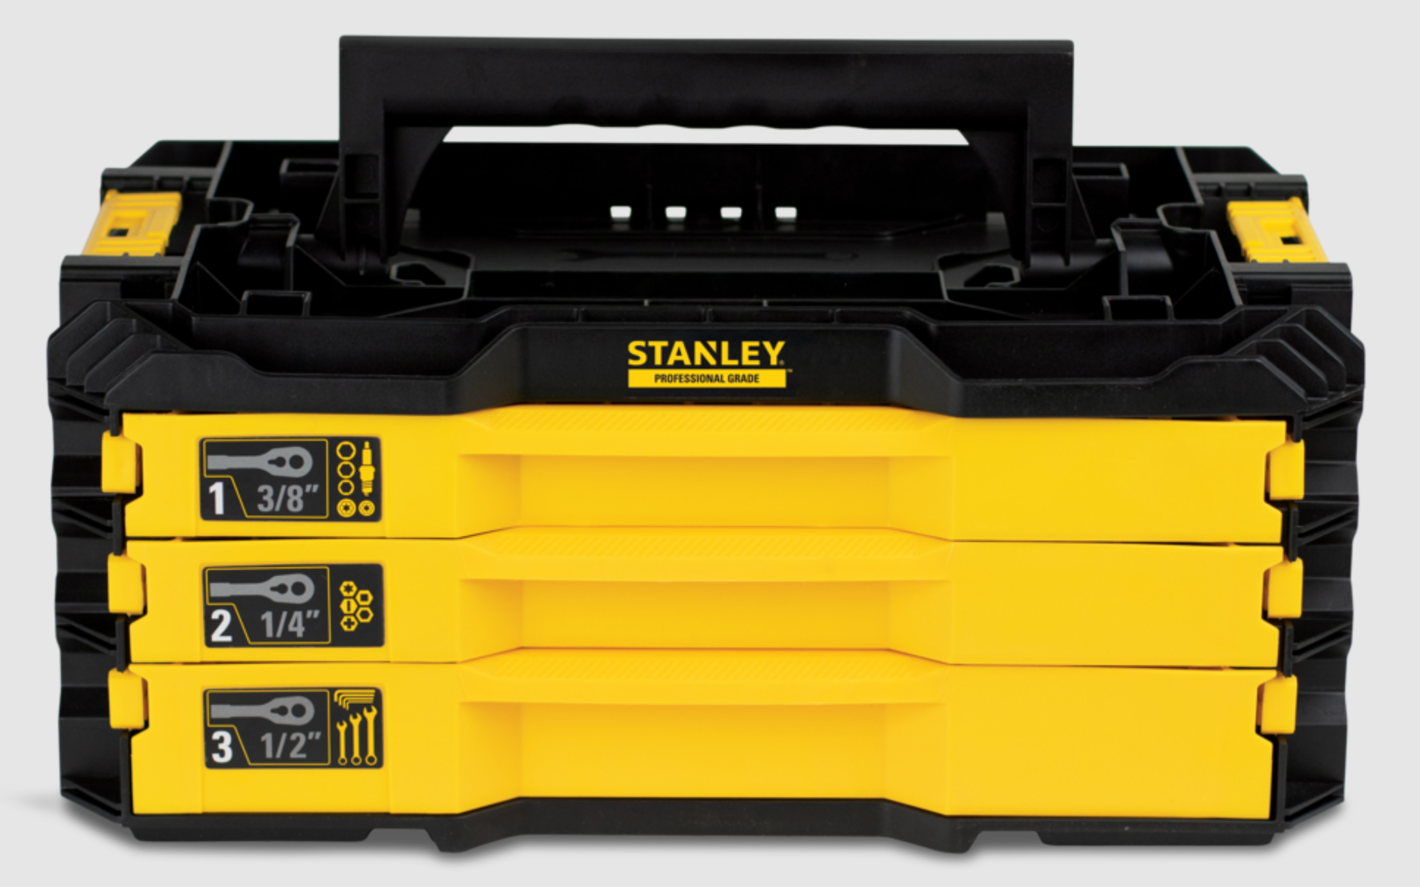 Stanley Professional Grade Black Chrome Socket Set, 203-pc SAE/Metric